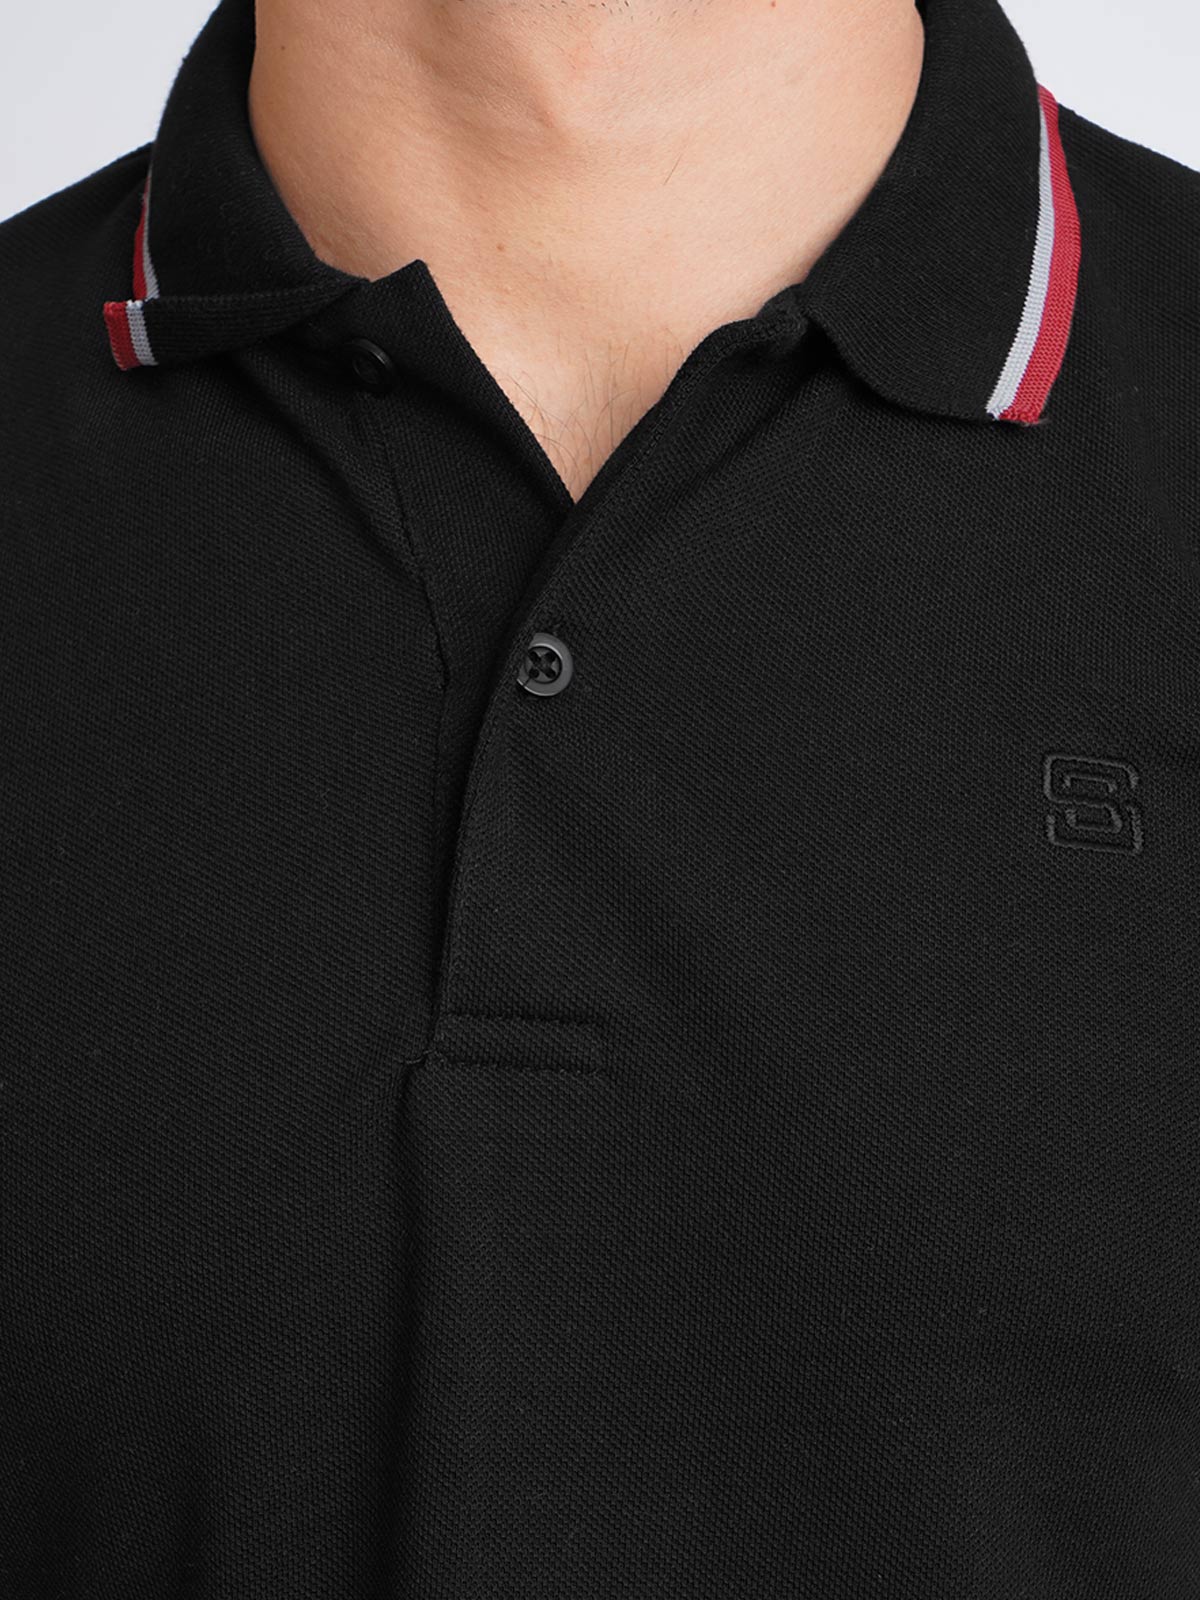 Black Plain Contrast Tipping Half Sleeves Polo T-Shirt (POLO-595)